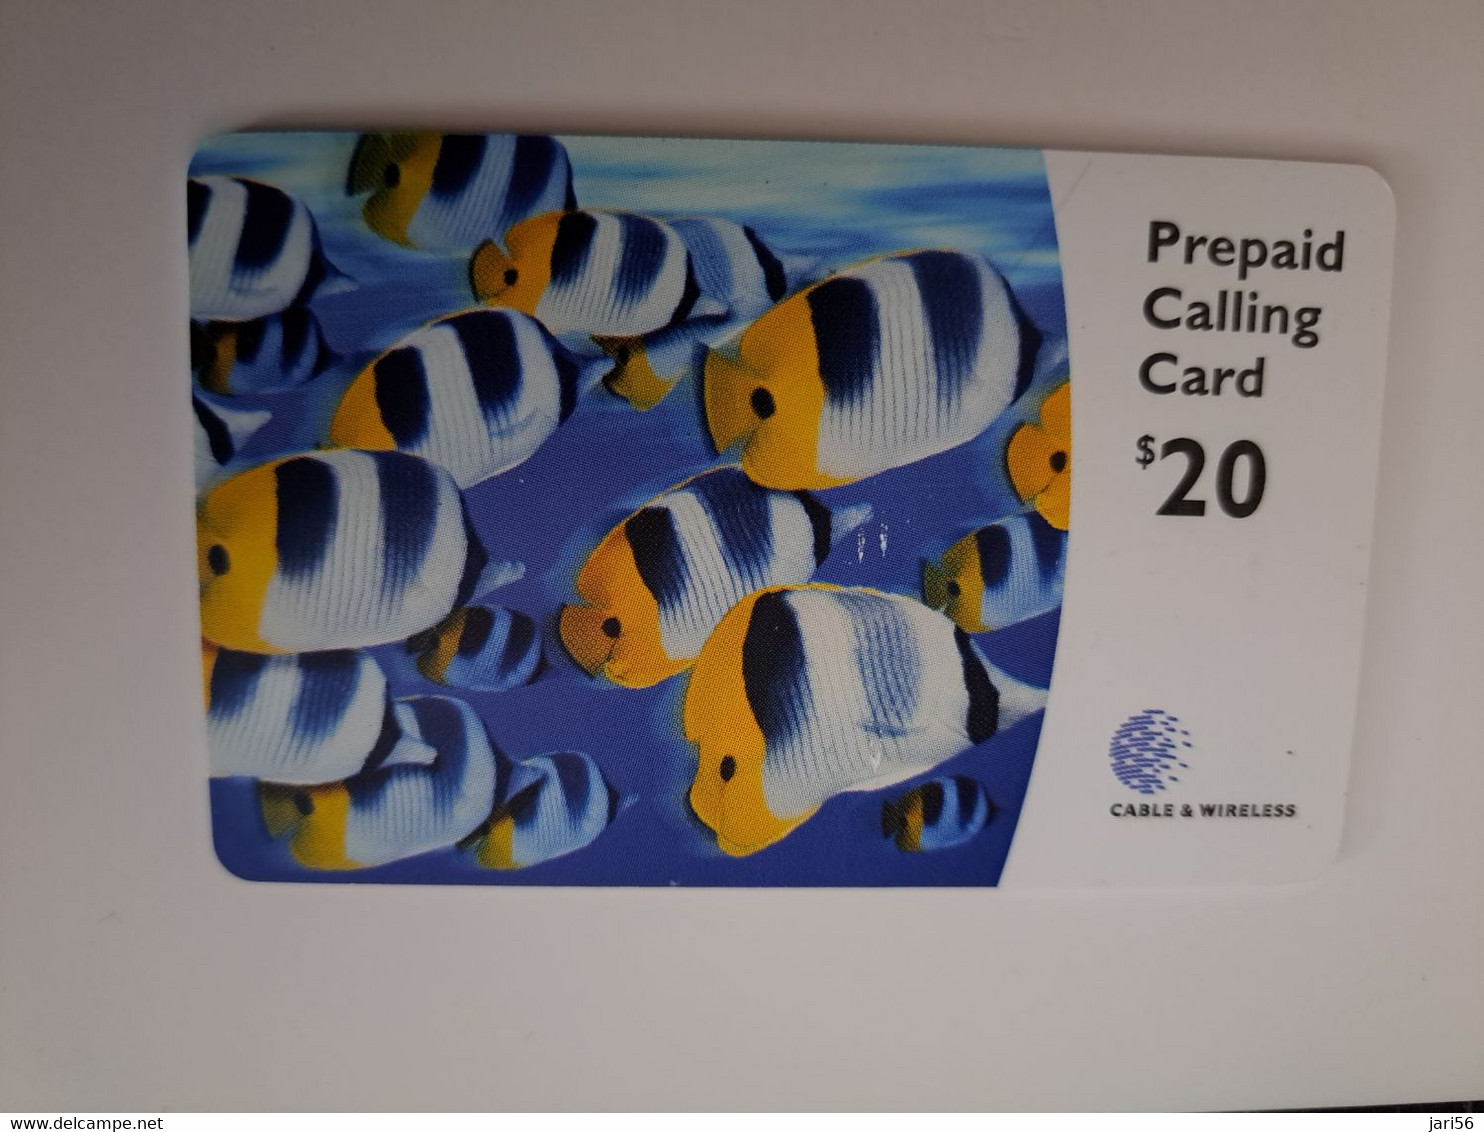 BERMUDA  $ 20,- C&W     / THICK CARD /  BERMUDA  TROPICAL FISH /  PREPAID CARD  Fine USED  **11473** - Bermudas